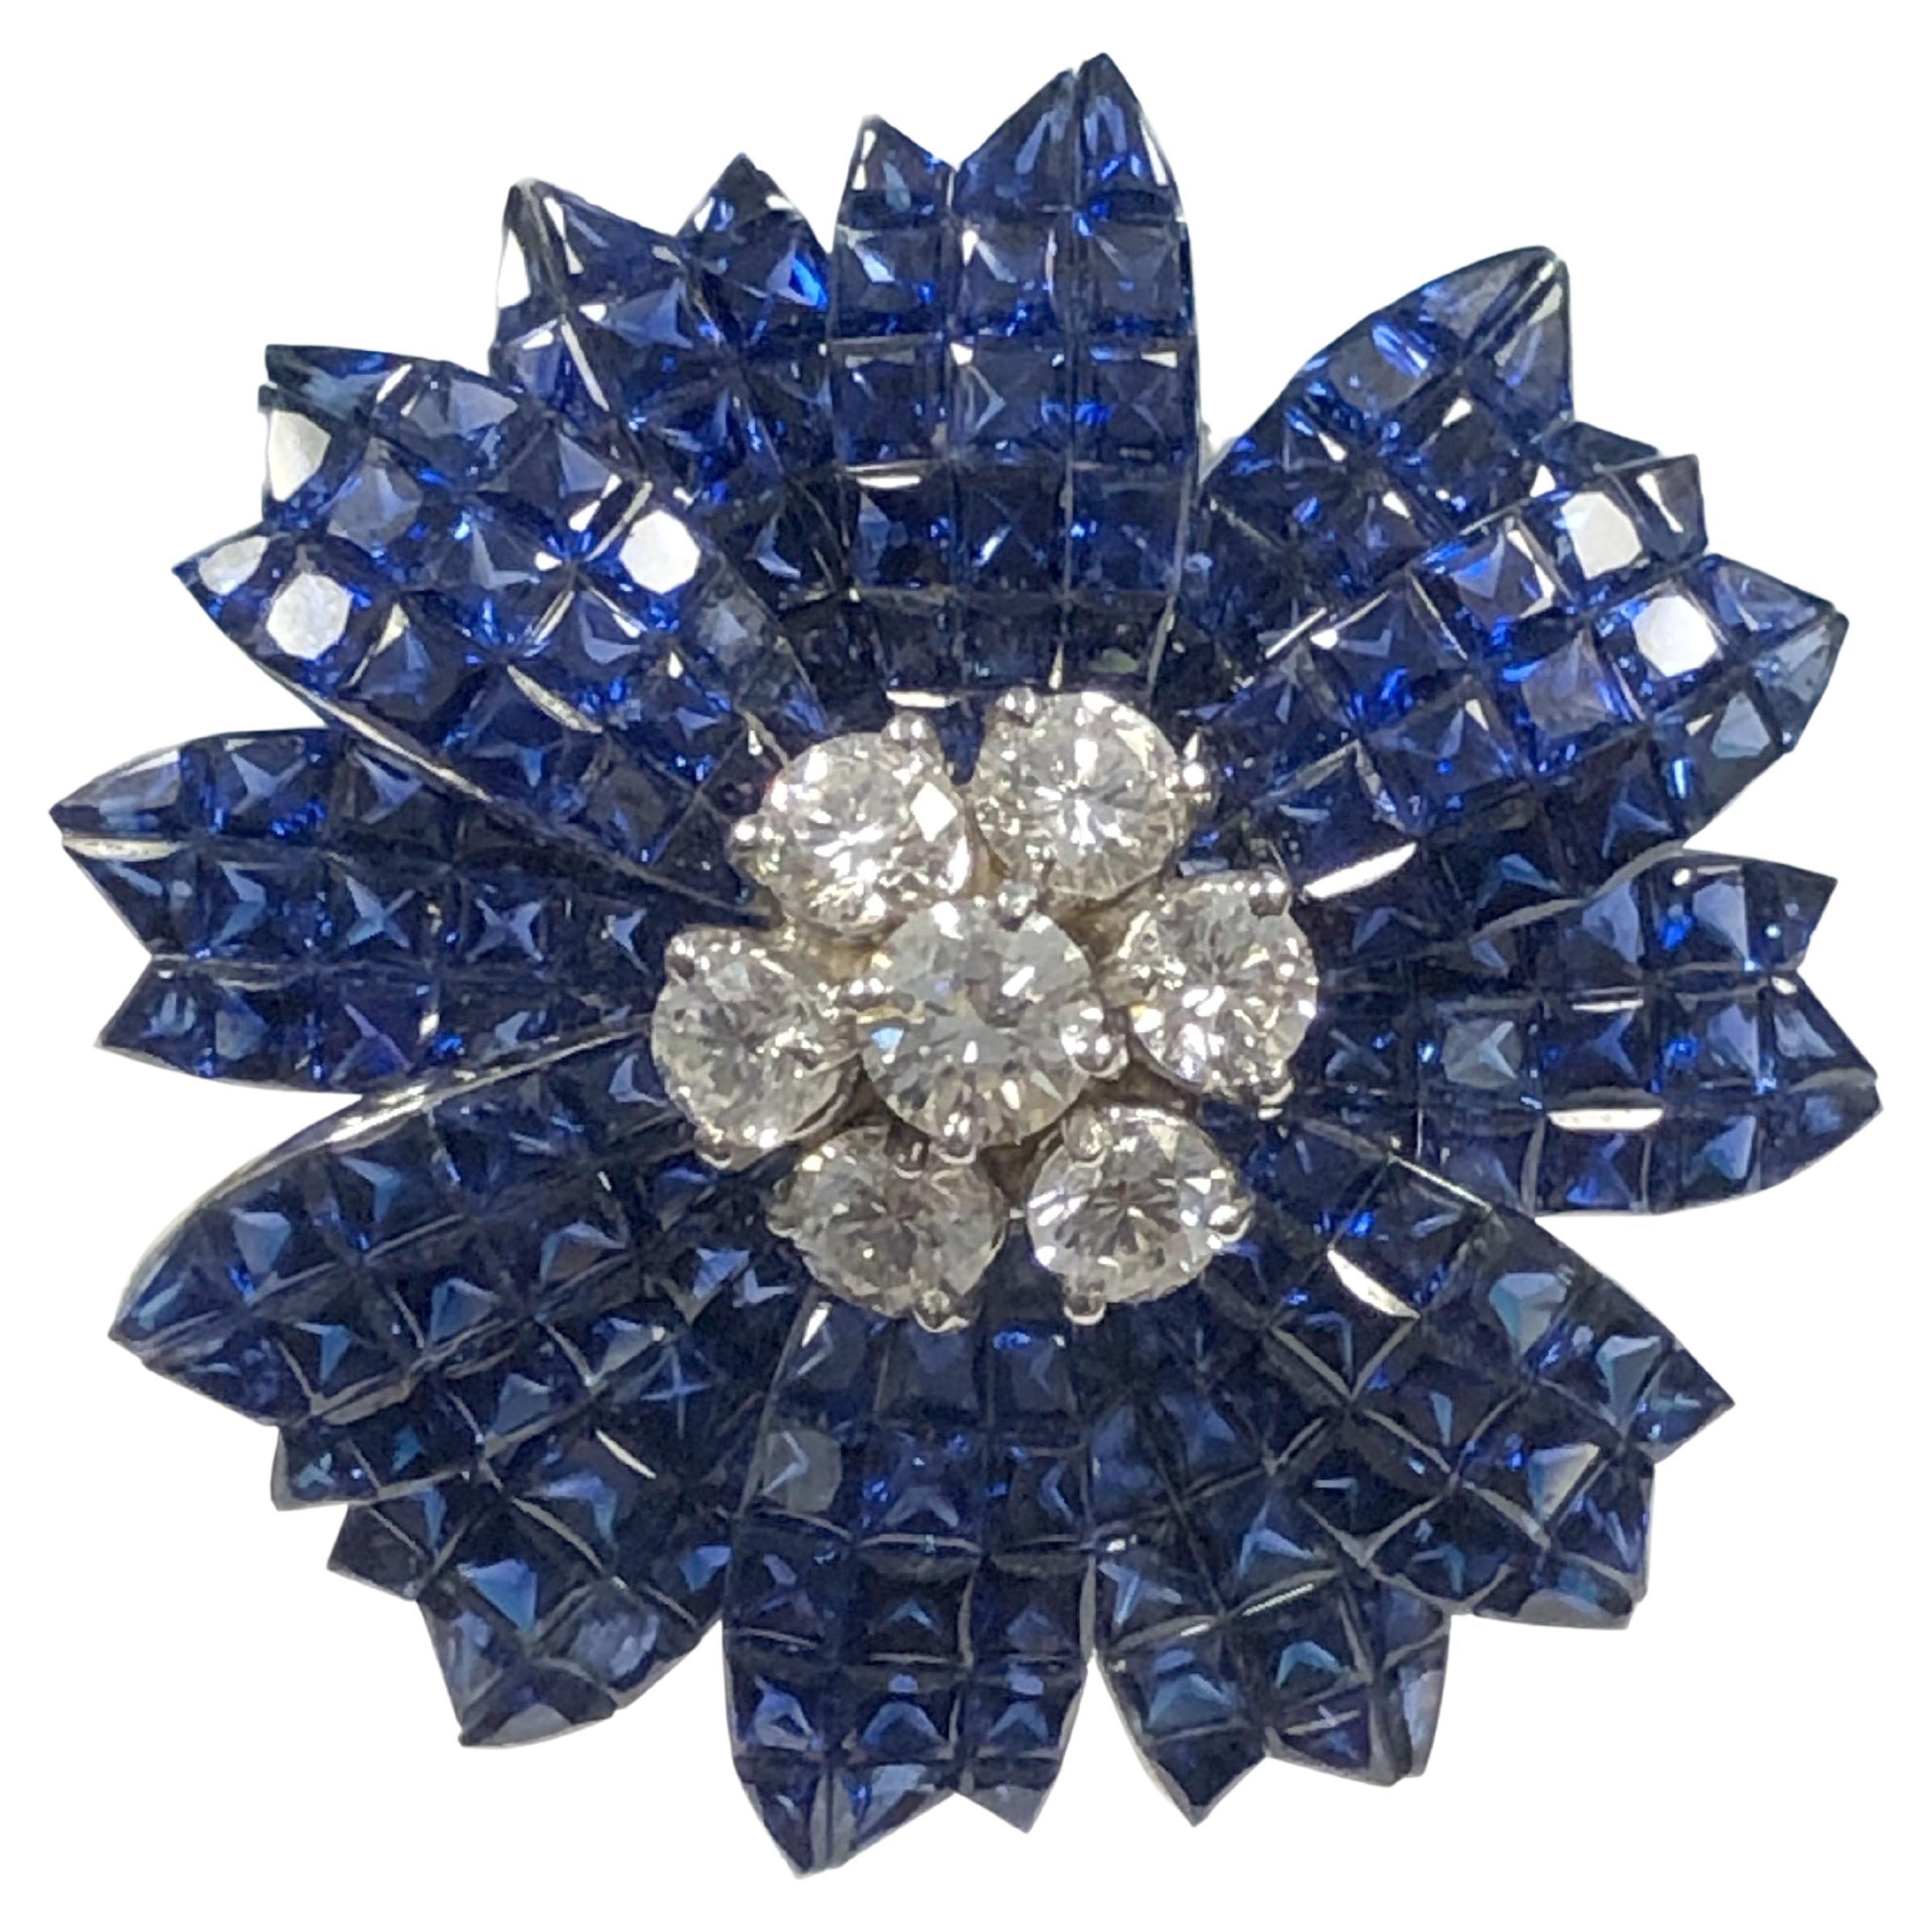 Sabbadini Invisible Set Gold Sapphire and Diamond Flower Brooch